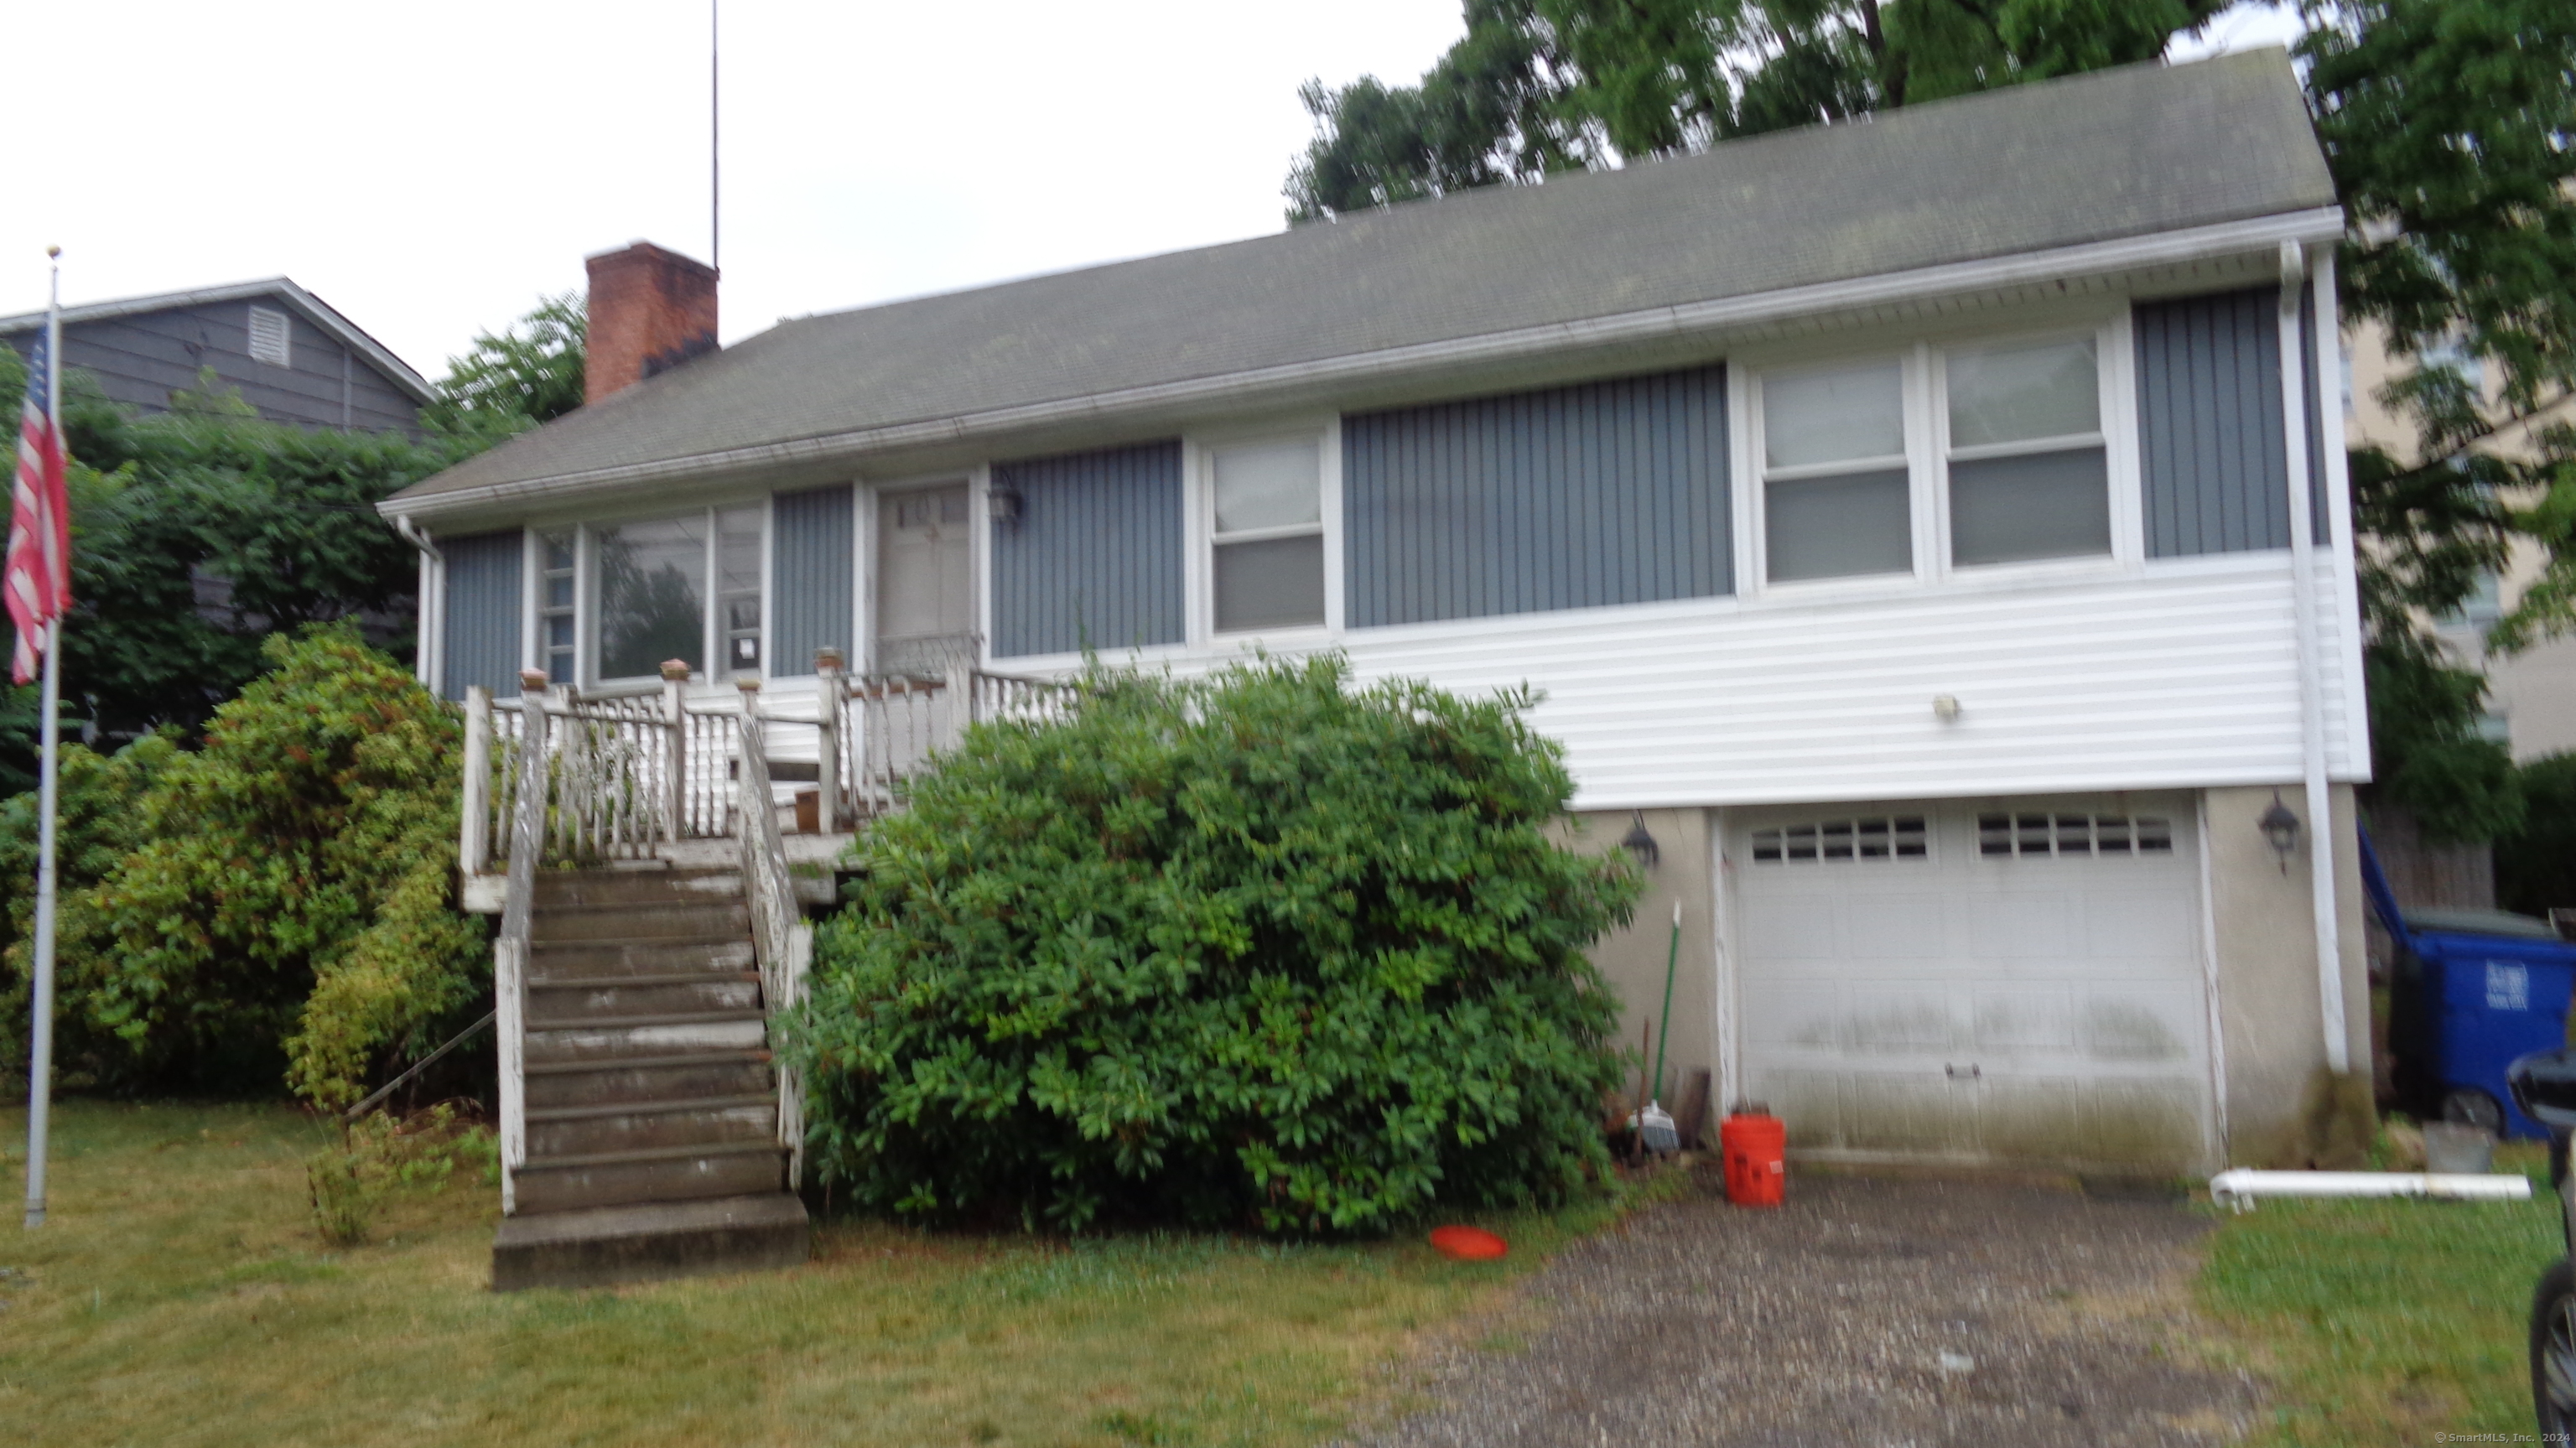 Property for Sale at 175 Crestview Drive, Bridgeport, Connecticut - Bedrooms: 3 
Bathrooms: 1 
Rooms: 6  - $364,000